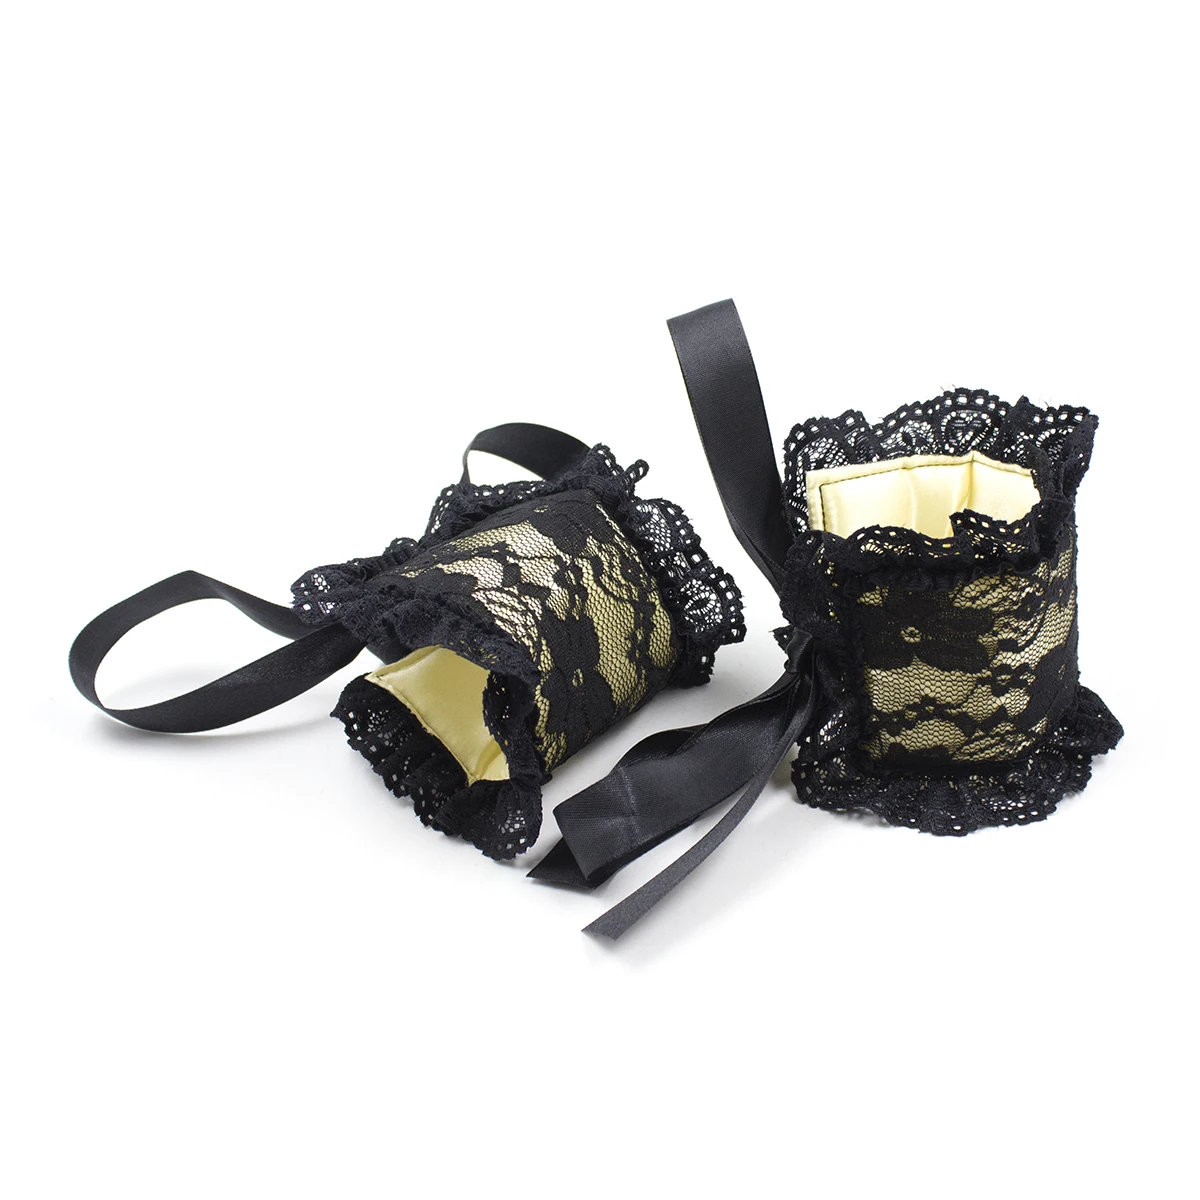 BDSM Restraint Bondage Sex Toys Kit Lace Blindfold Handcuffs Shackles Set for Couple Game